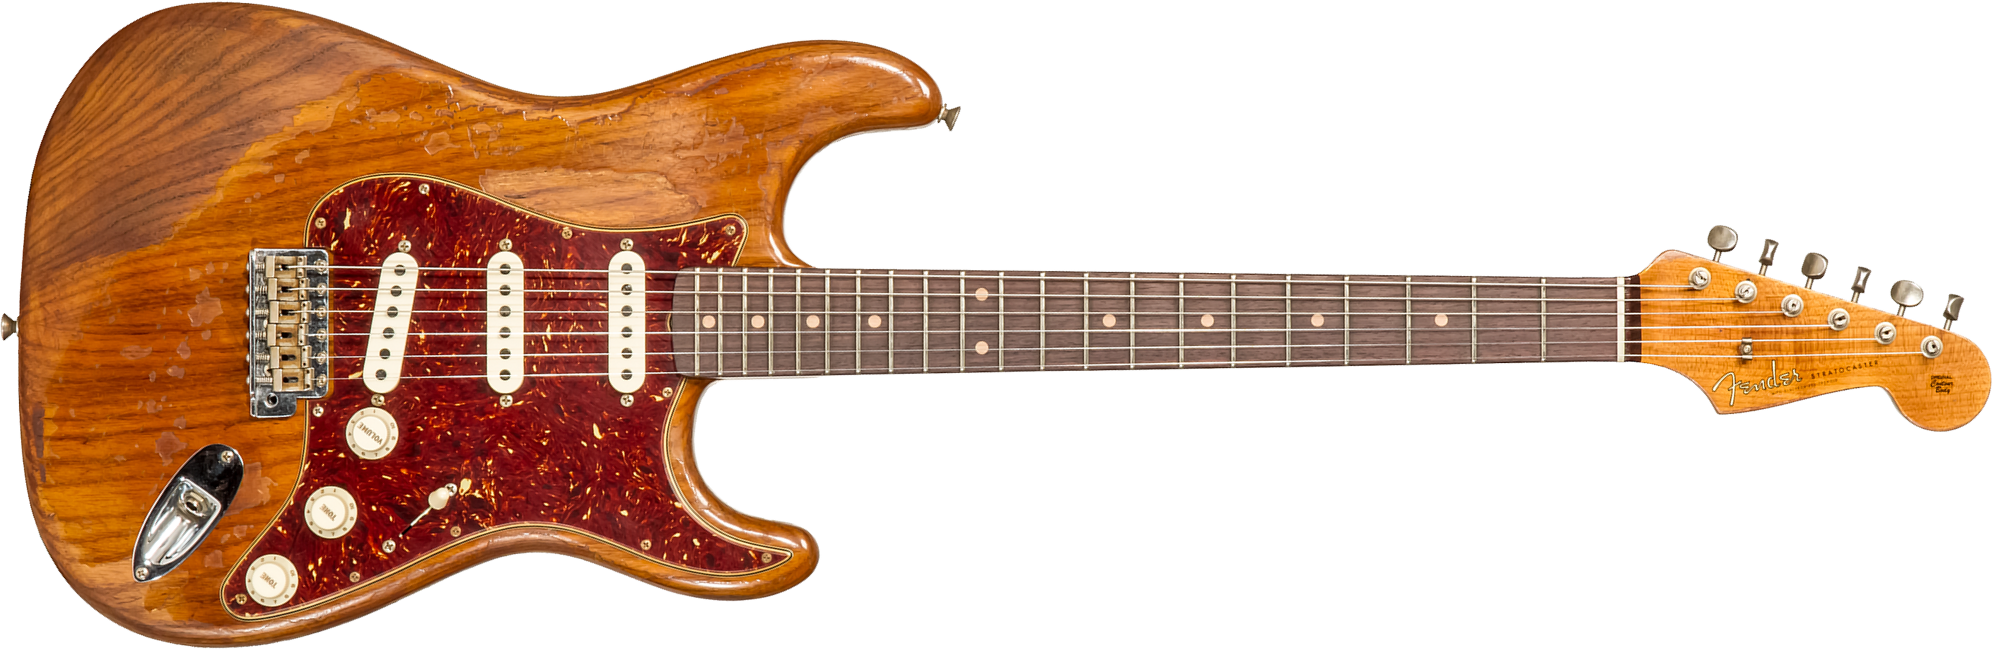 Fender Custom Shop Strat 1961 3s Trem Rw #cz570266 - Super Heavy Relic Natural - Guitarra eléctrica con forma de str. - Main picture